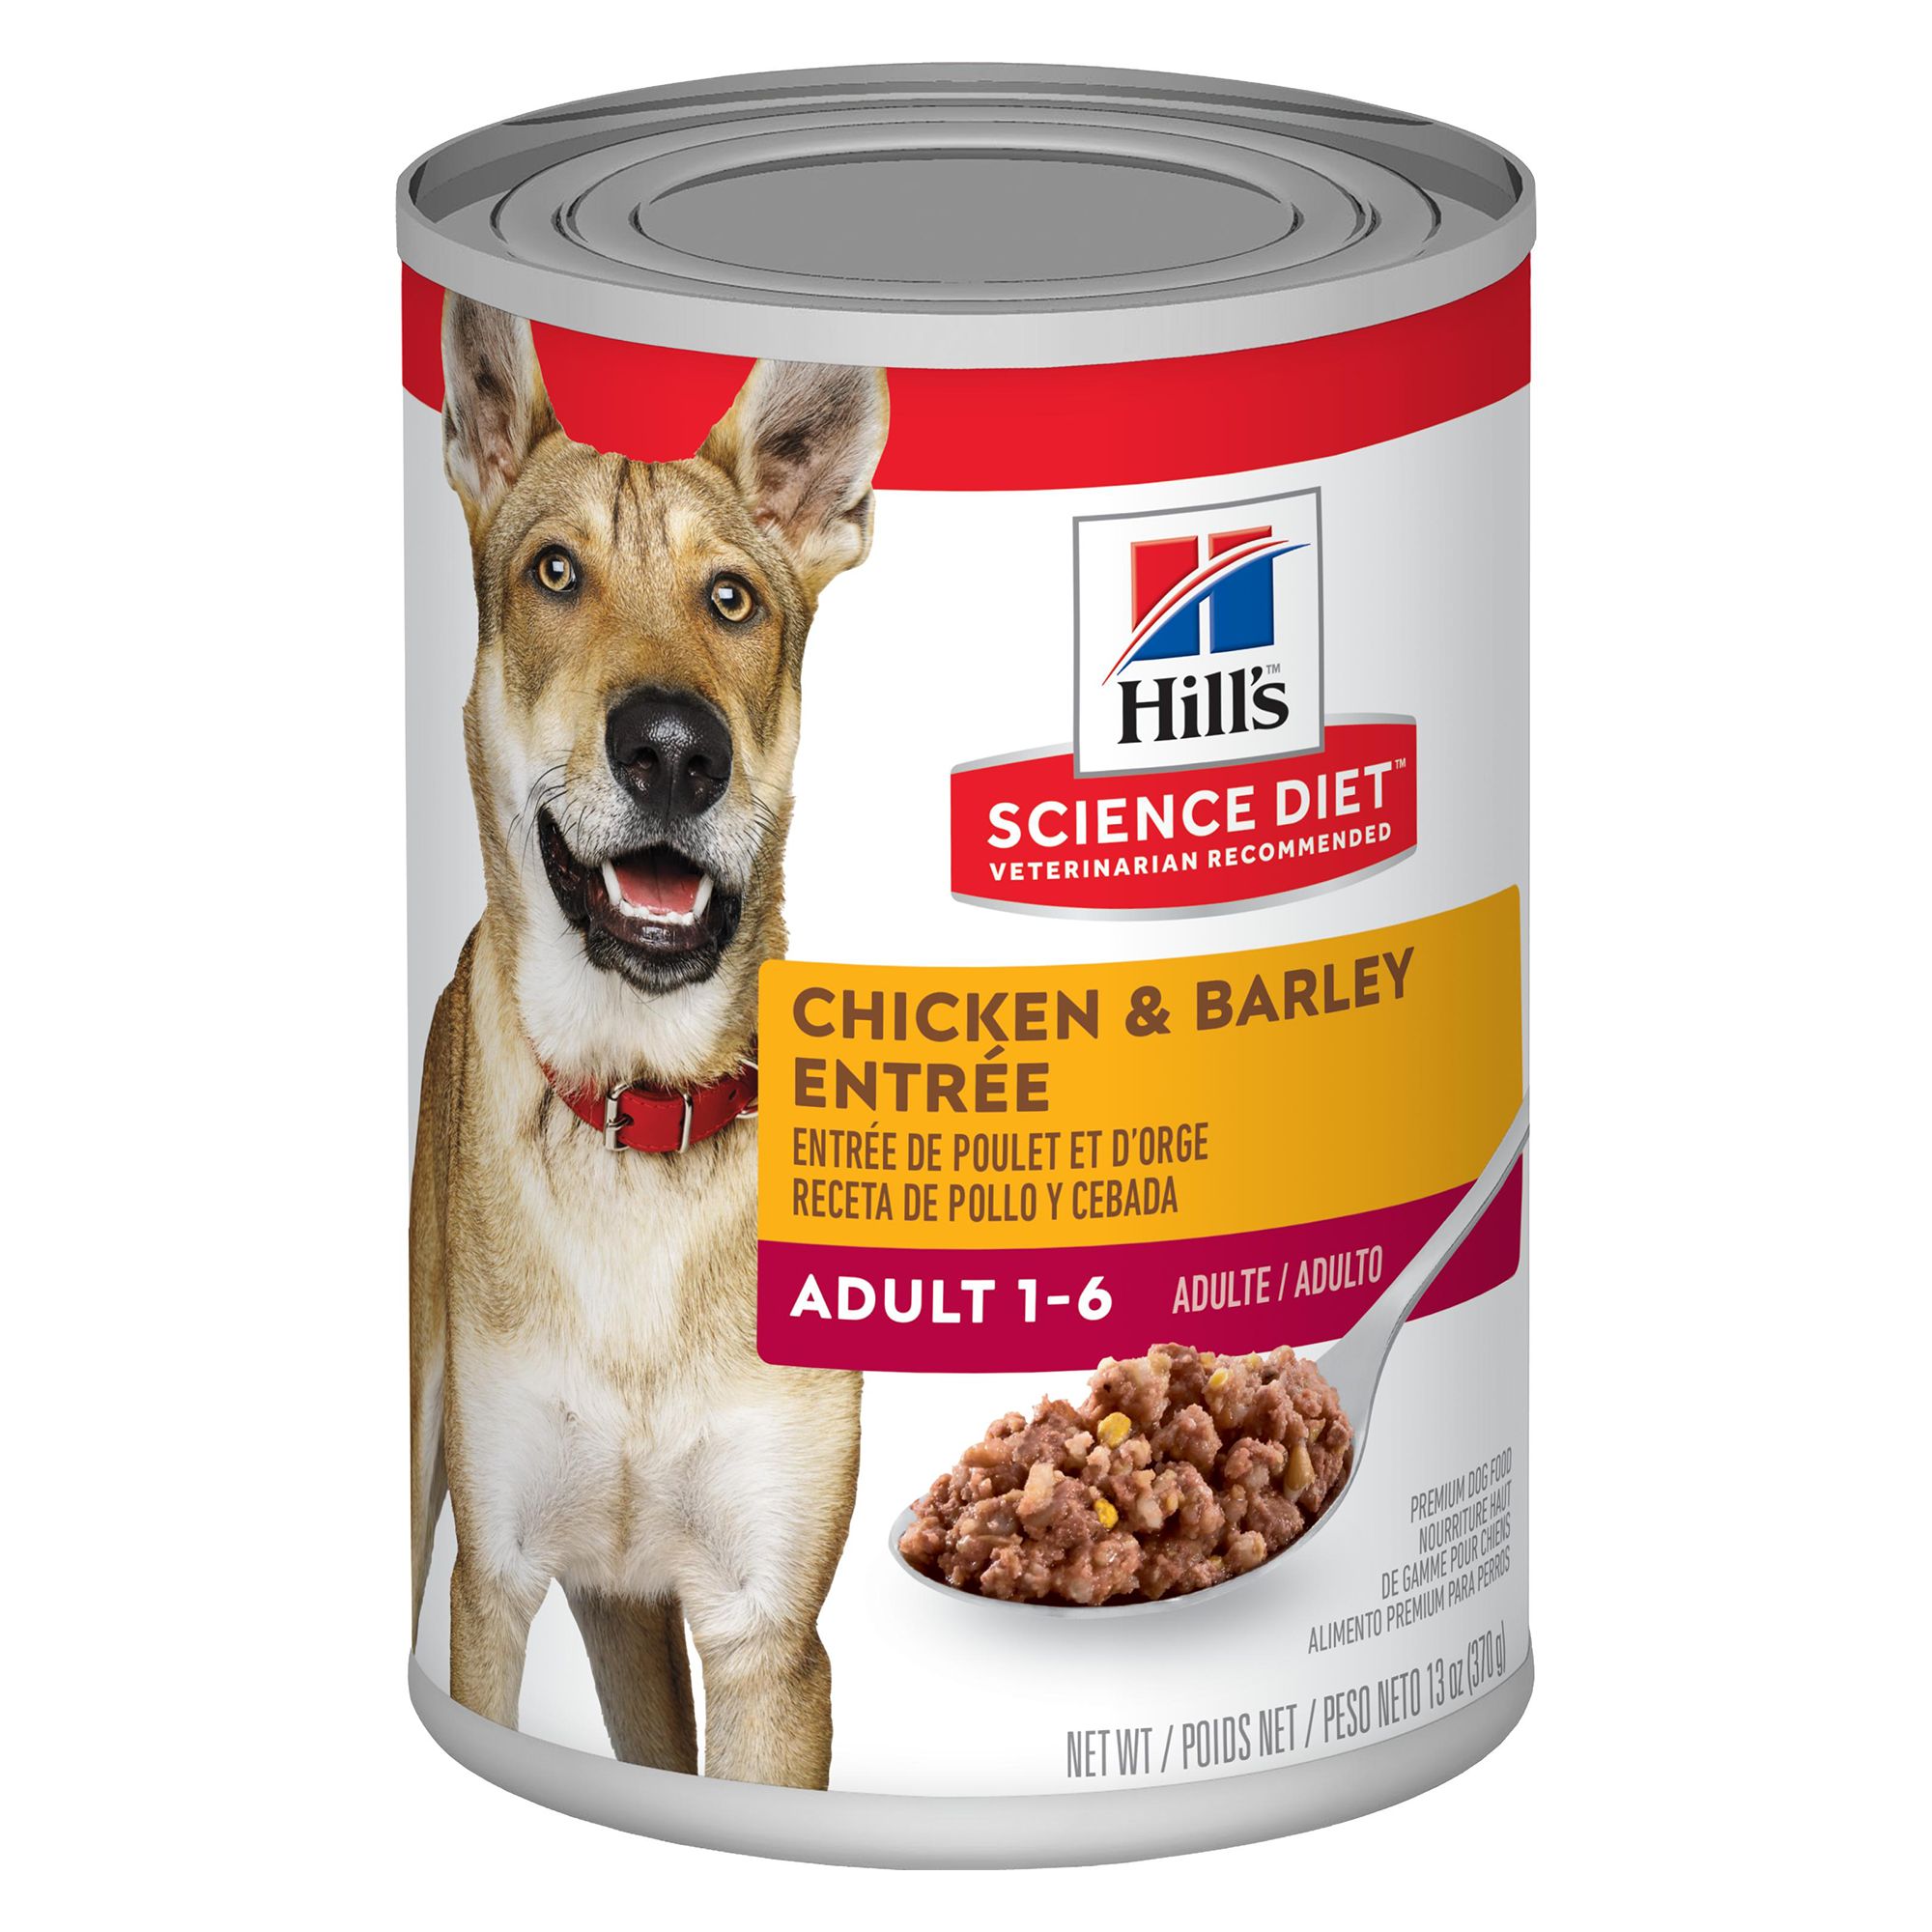 scientific hills dog food